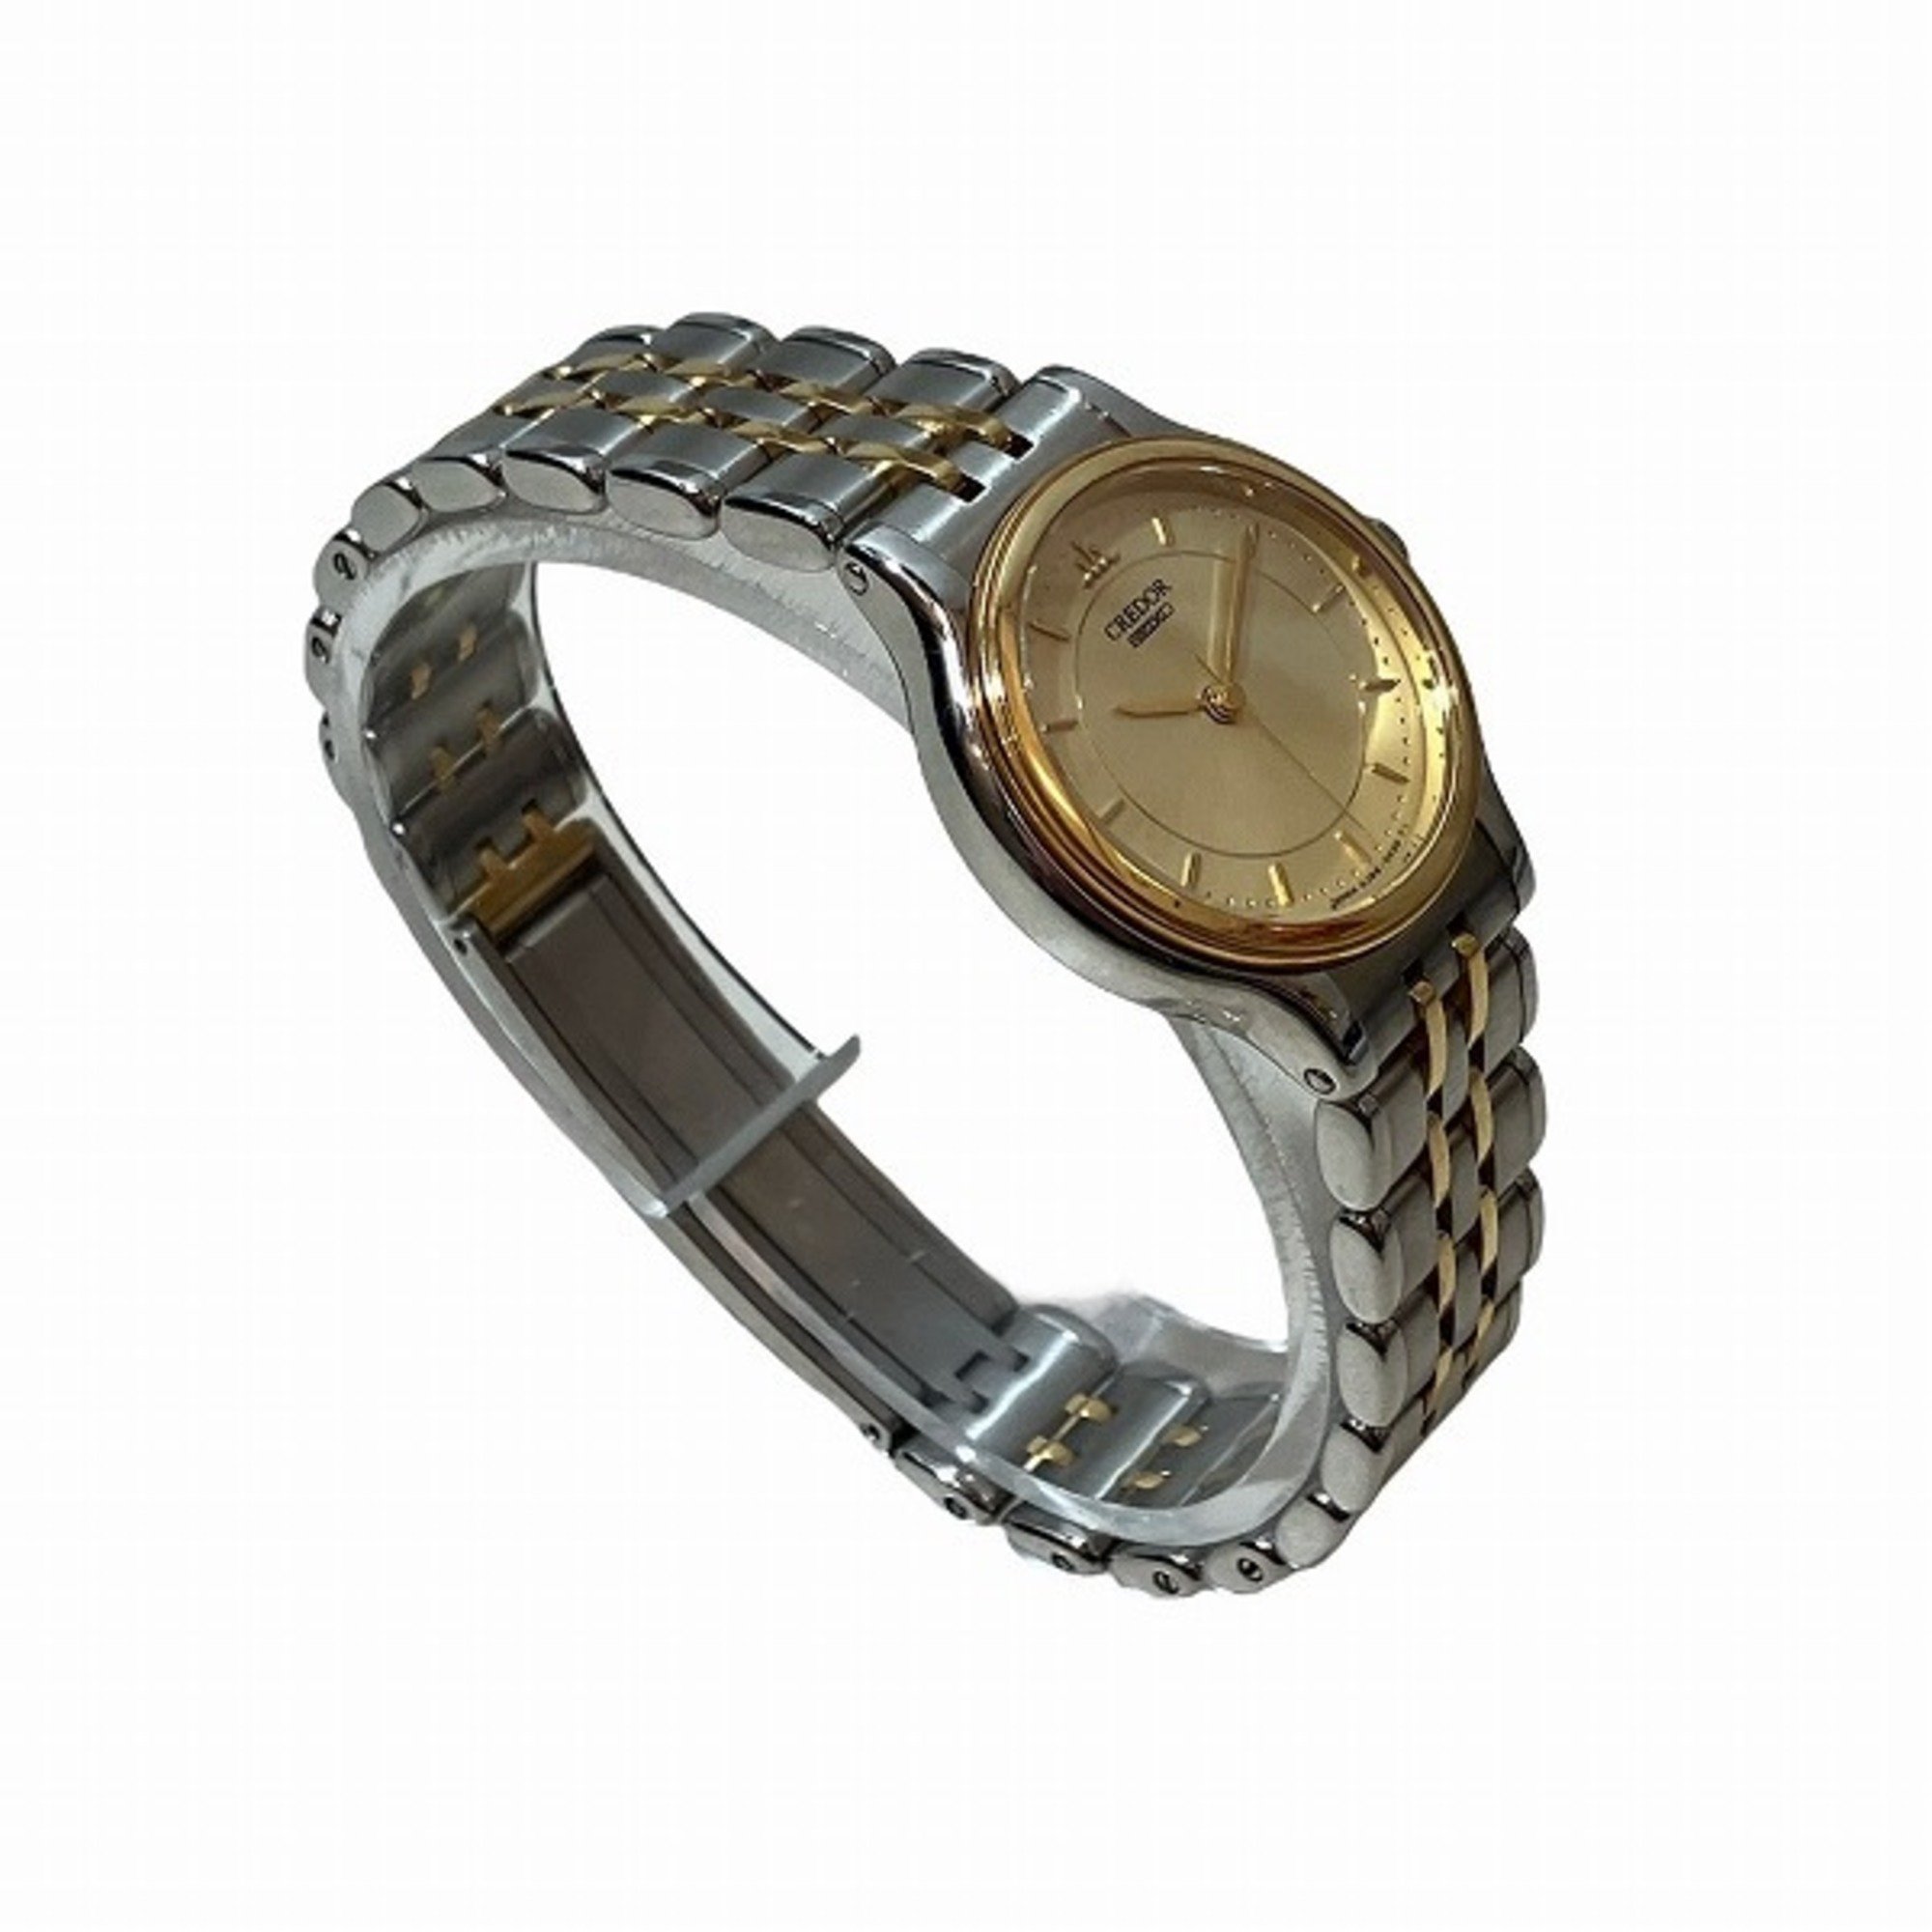 Seiko Gredor 4J85-0A20 Quartz Watch Ladies